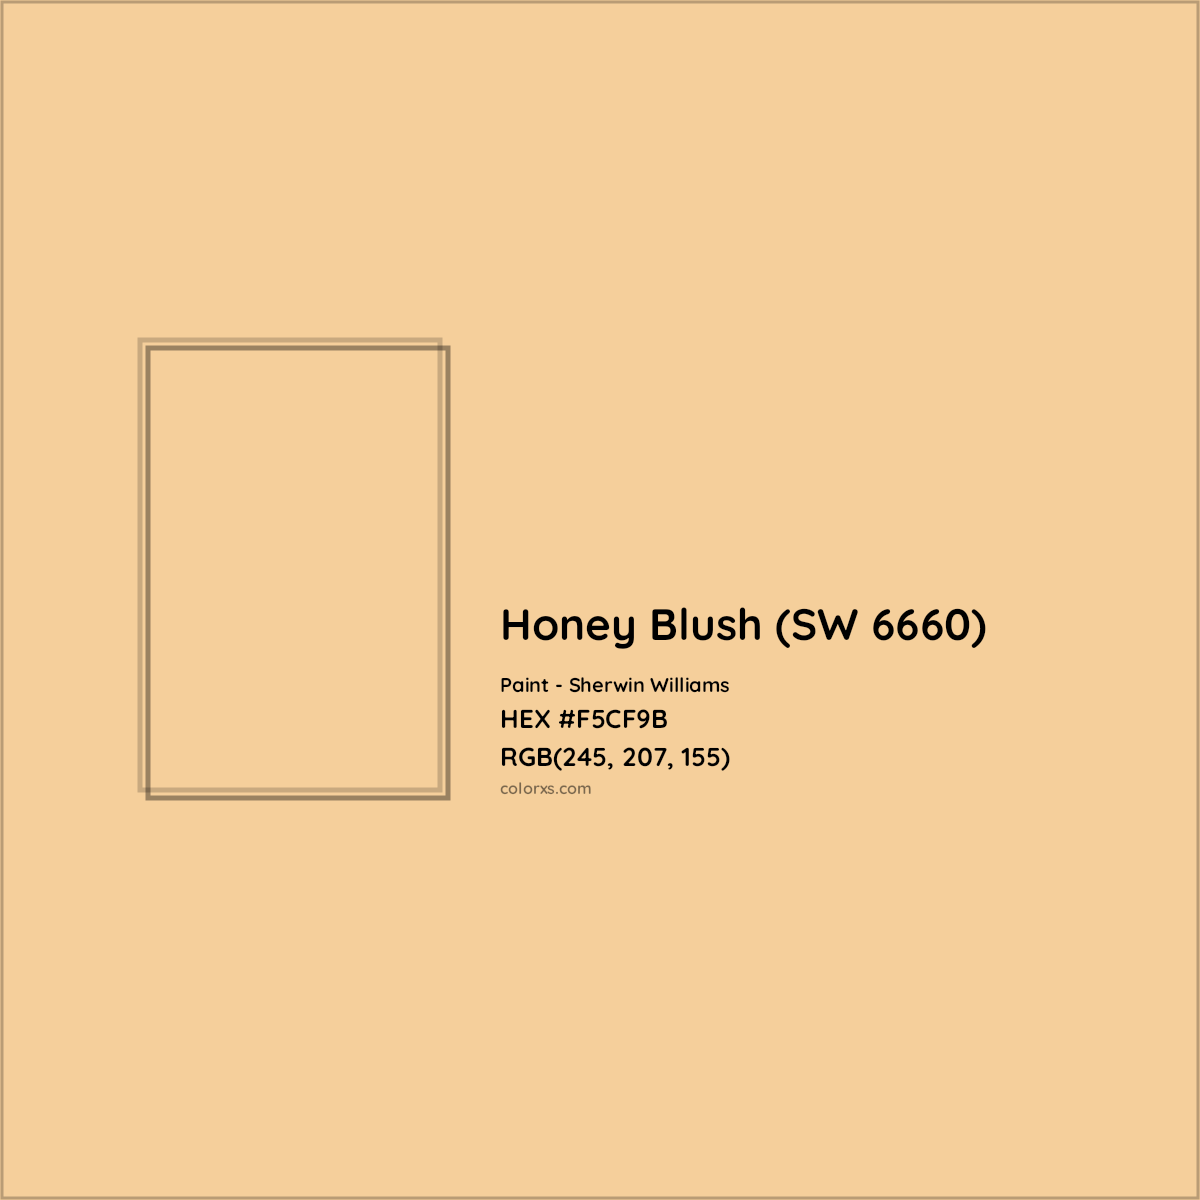 HEX #F5CF9B Honey Blush (SW 6660) Paint Sherwin Williams - Color Code